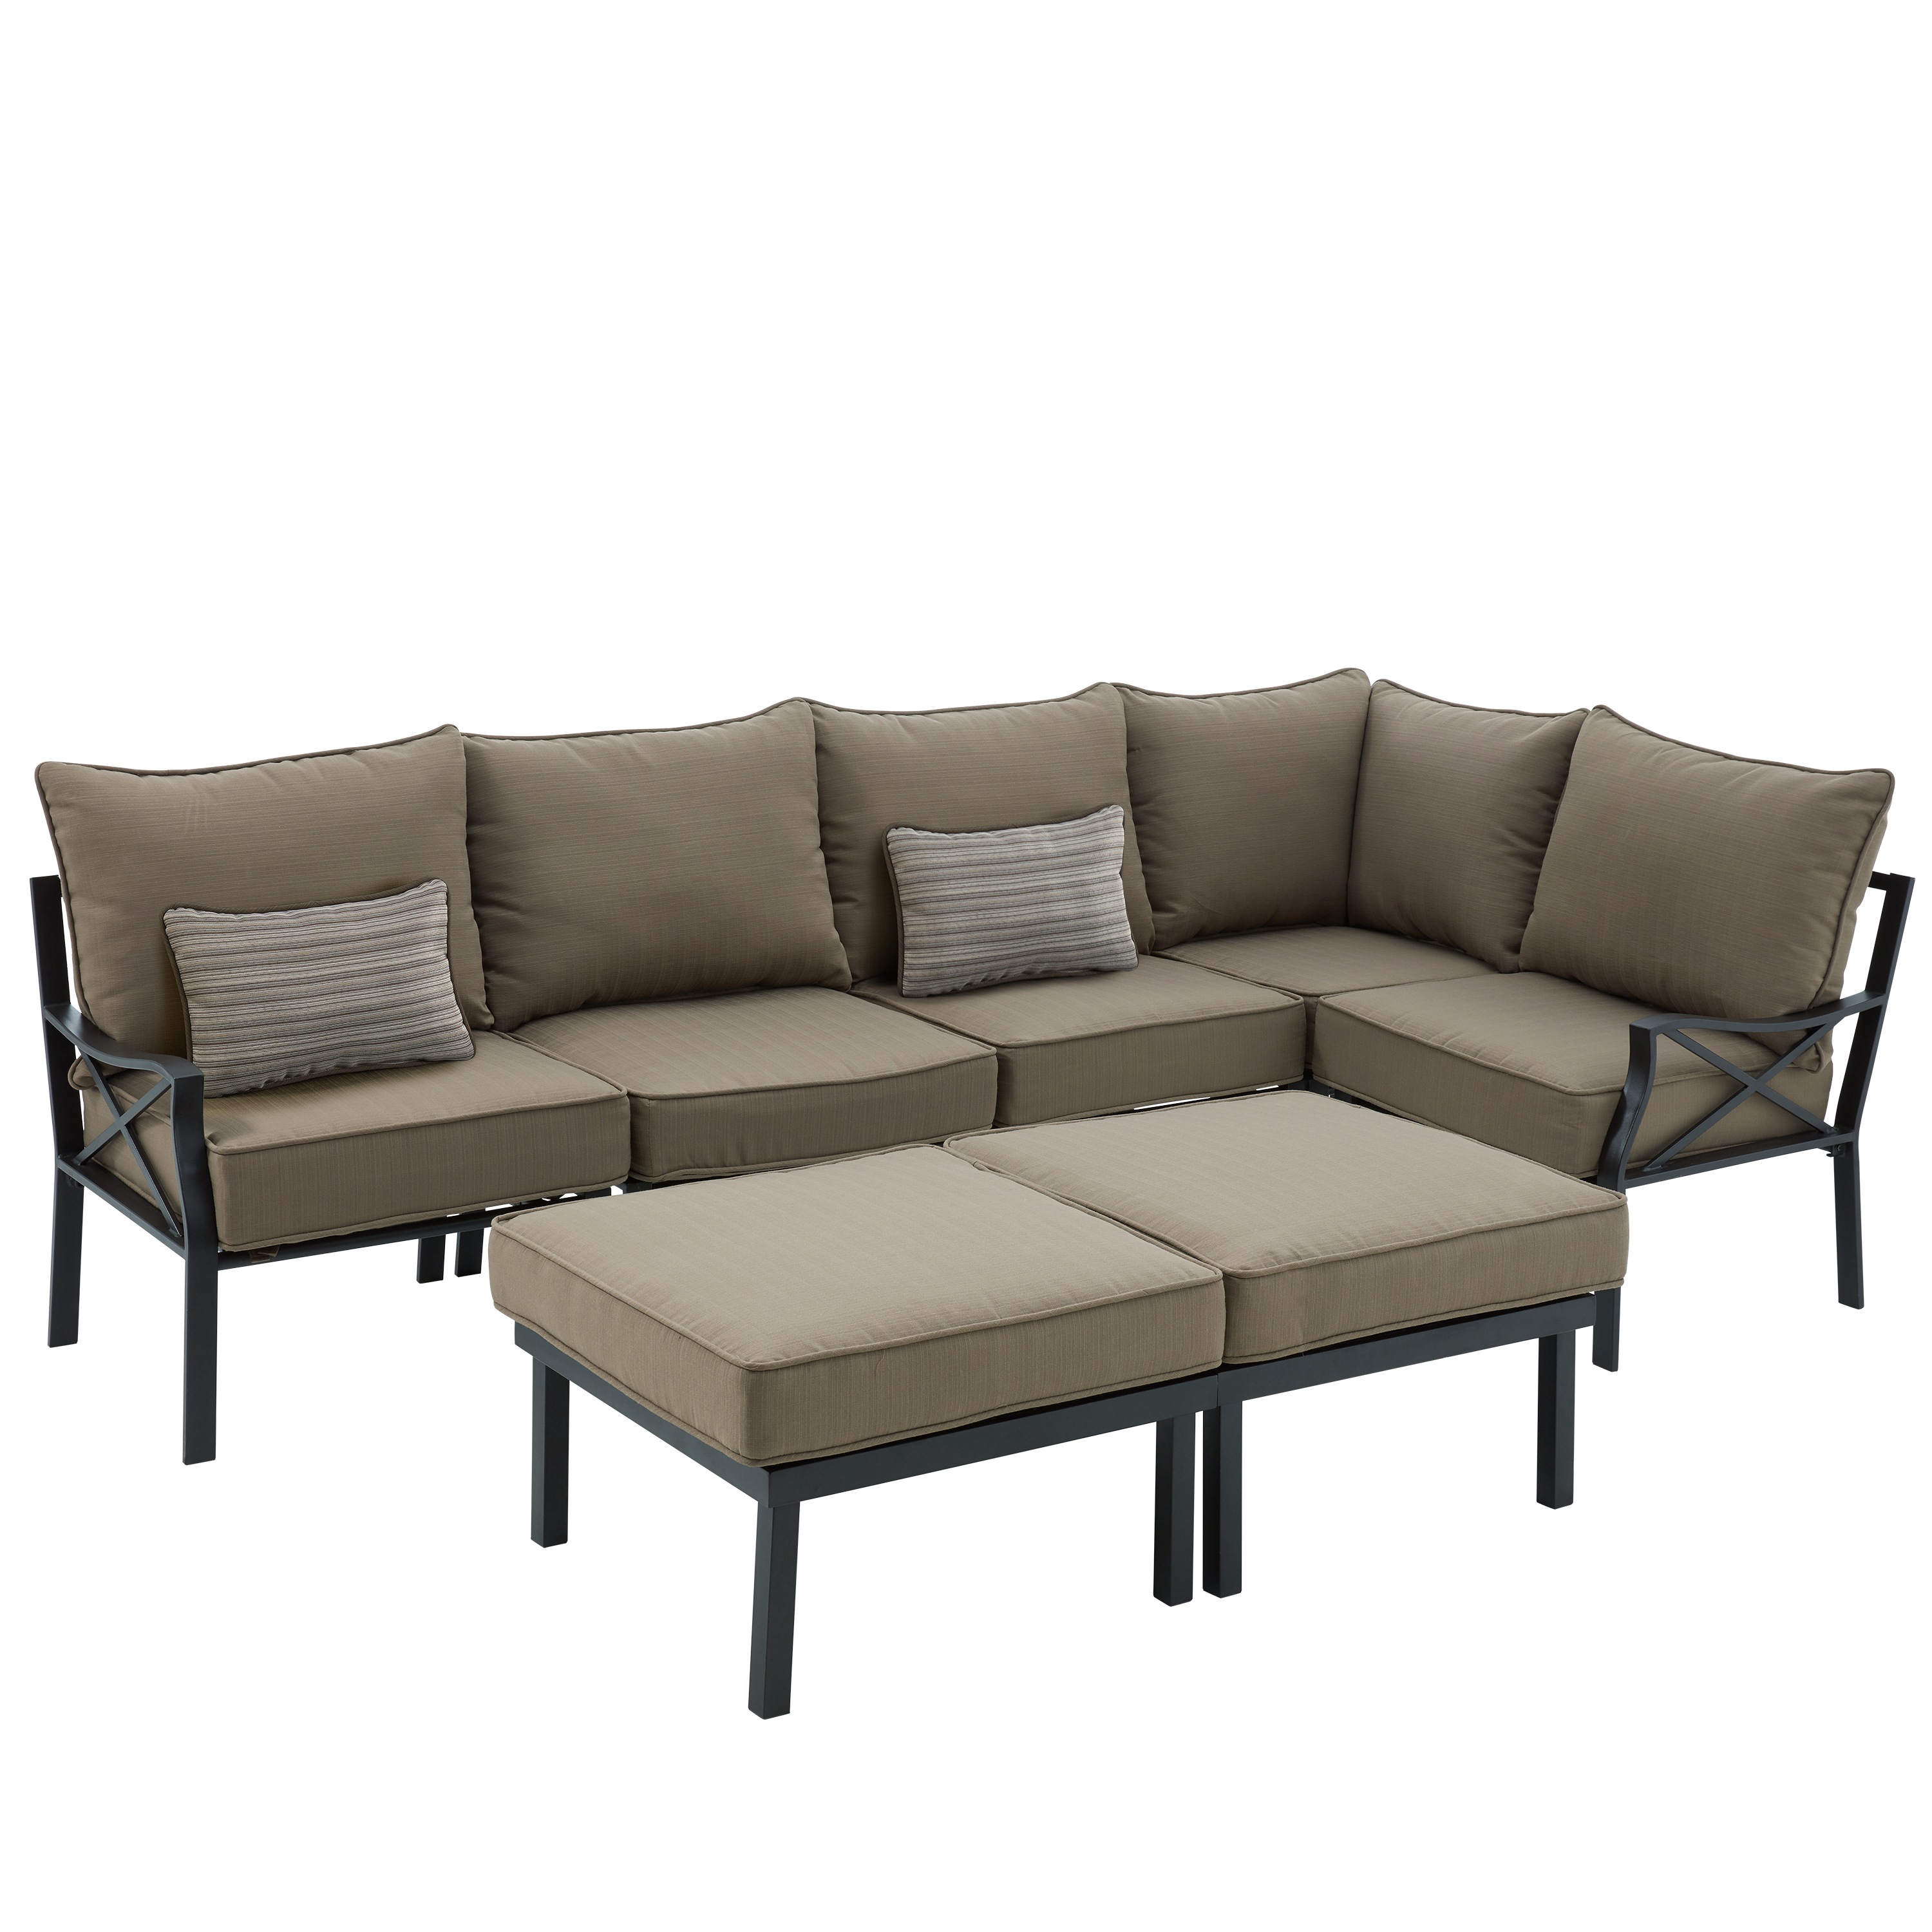 Mainstays Sandhill 7-Piece Outdoor Patio Sofa Sectional Set, Beige, Metal - image 2 of 6